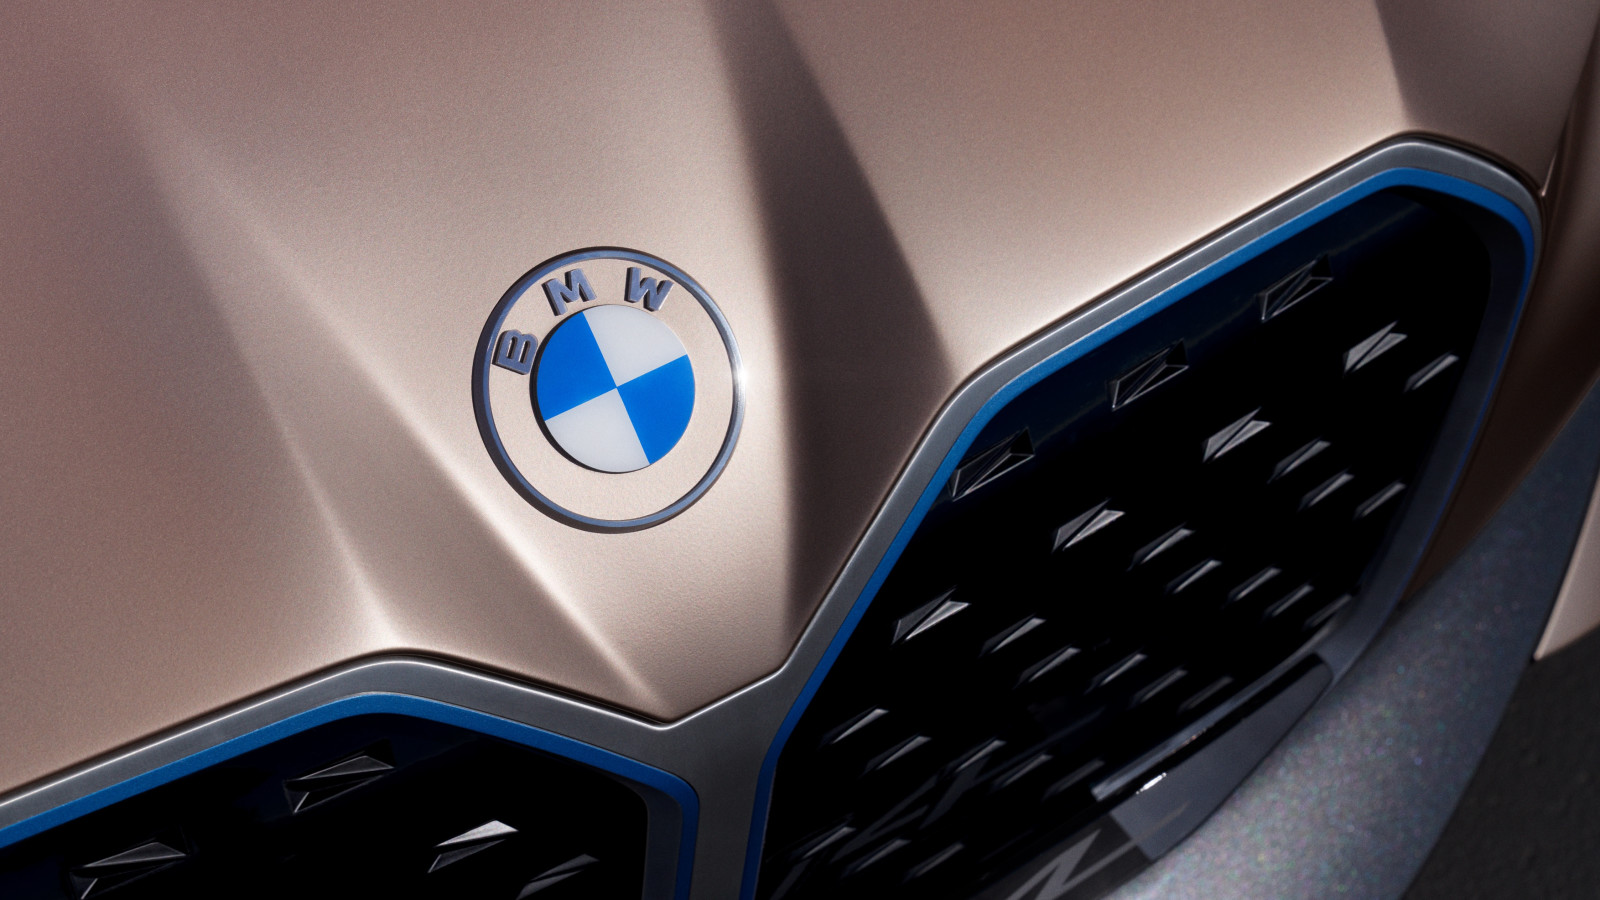 https://res.cloudinary.com/wired-de/image/upload/t_intro/v1/0/Auto-BMW-Neues-Logo_Kjpg.jpg